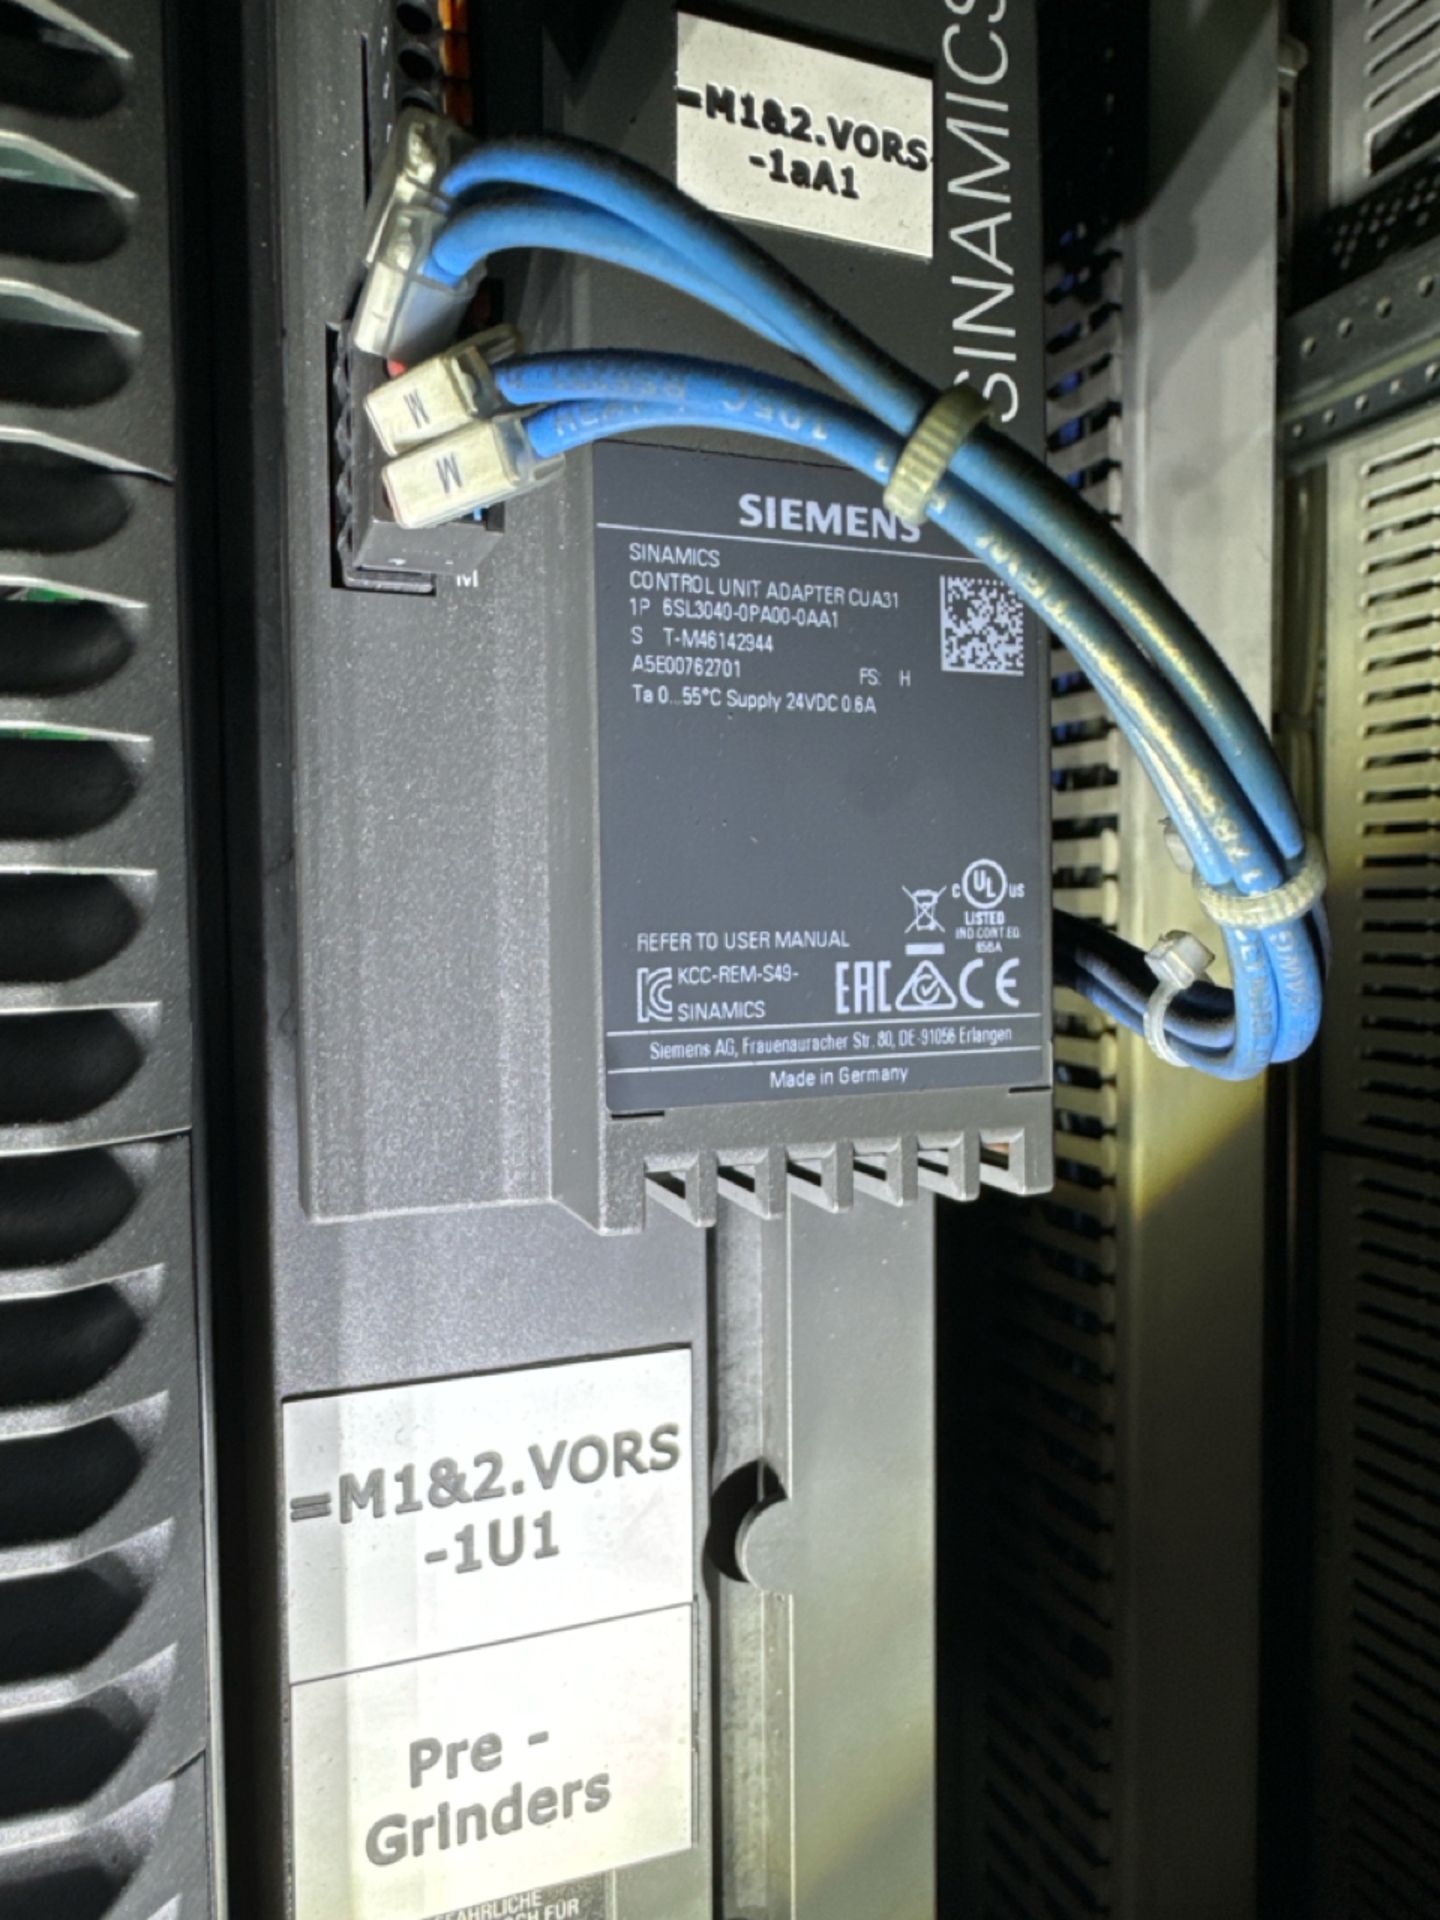 Siemens Sinamics Control Adapter CUA31 - Image 3 of 3